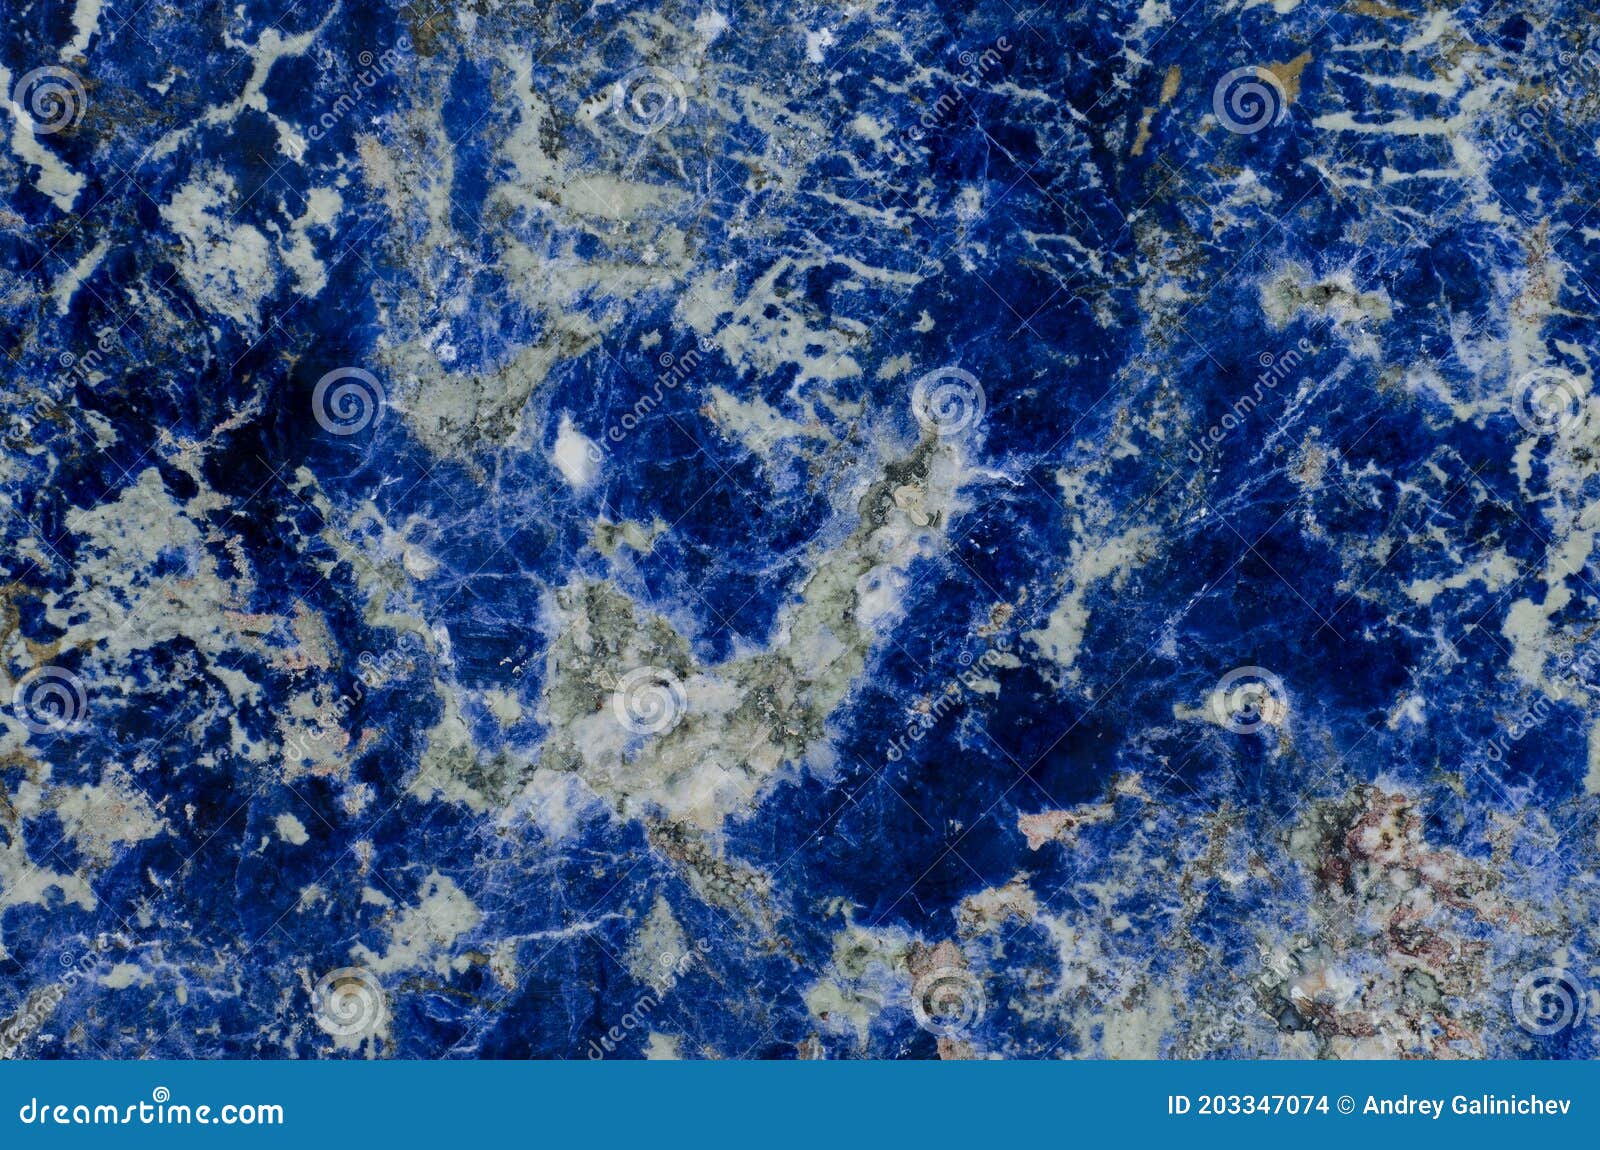 azul bahia, blue bahia, blue granite, blue marble. texture. close-up